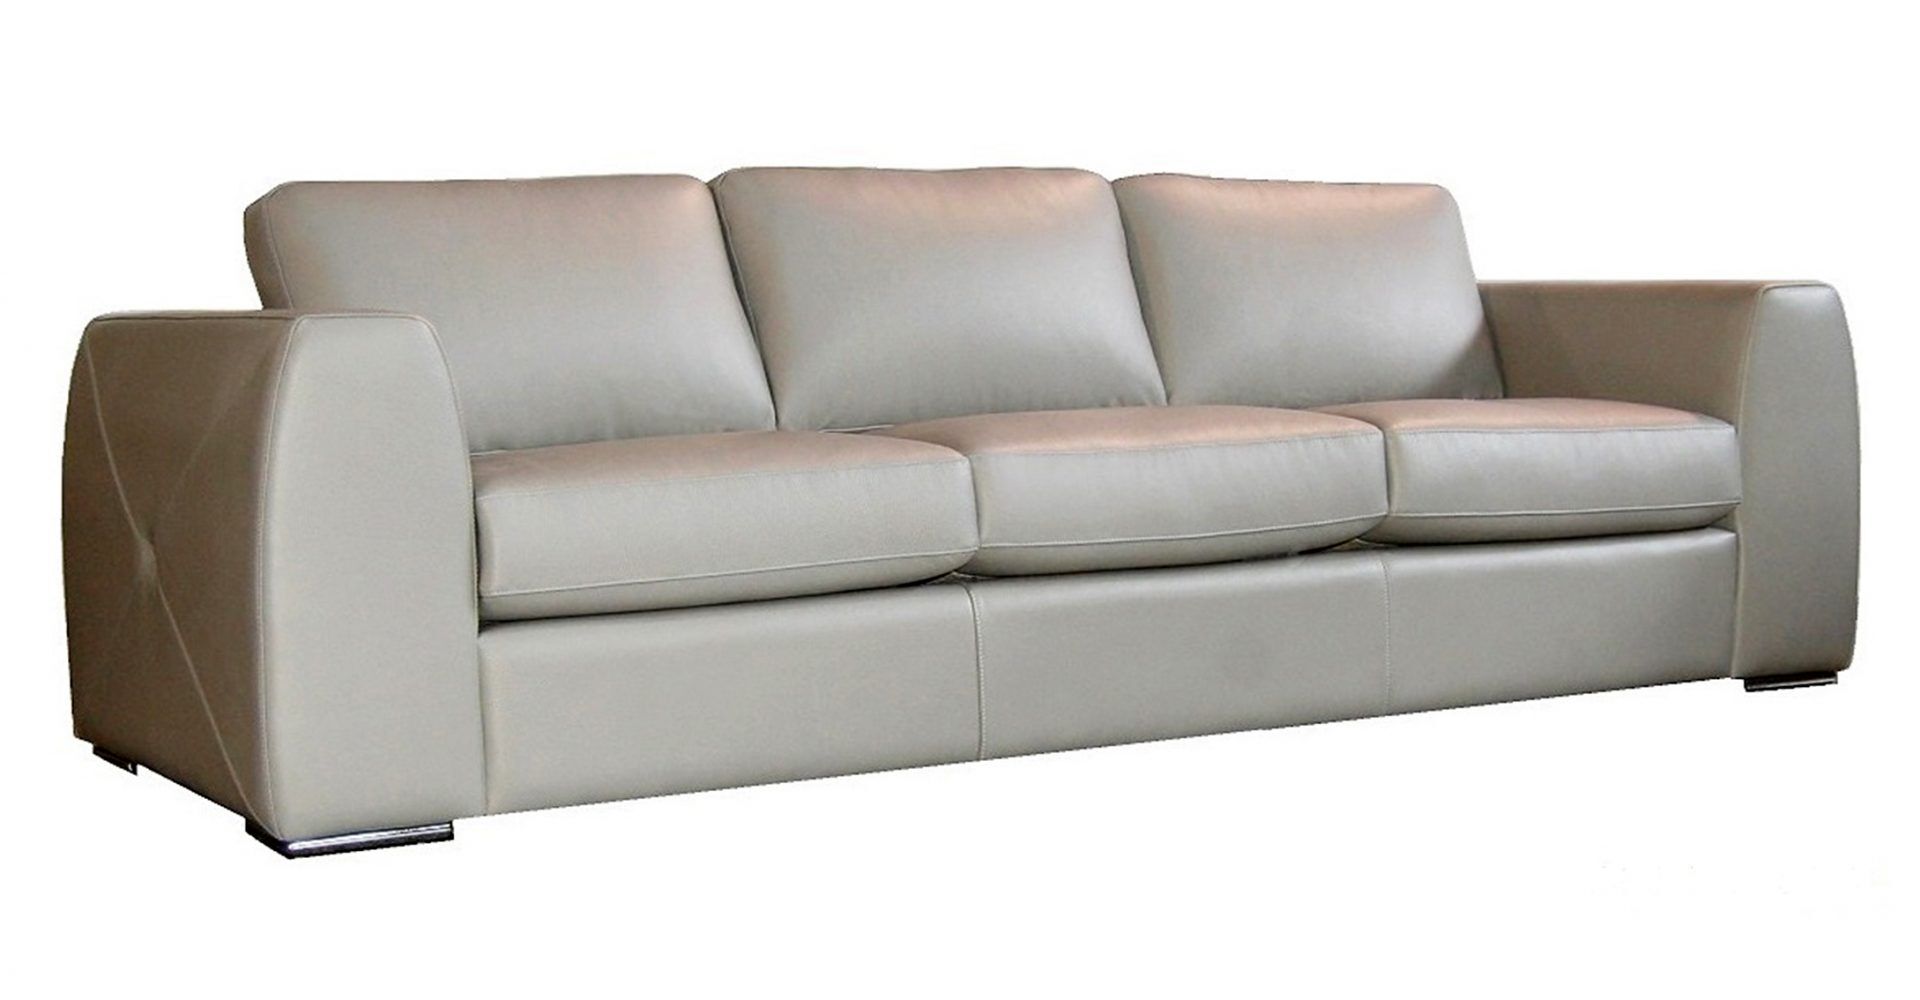 aston leather sofa bed homebase